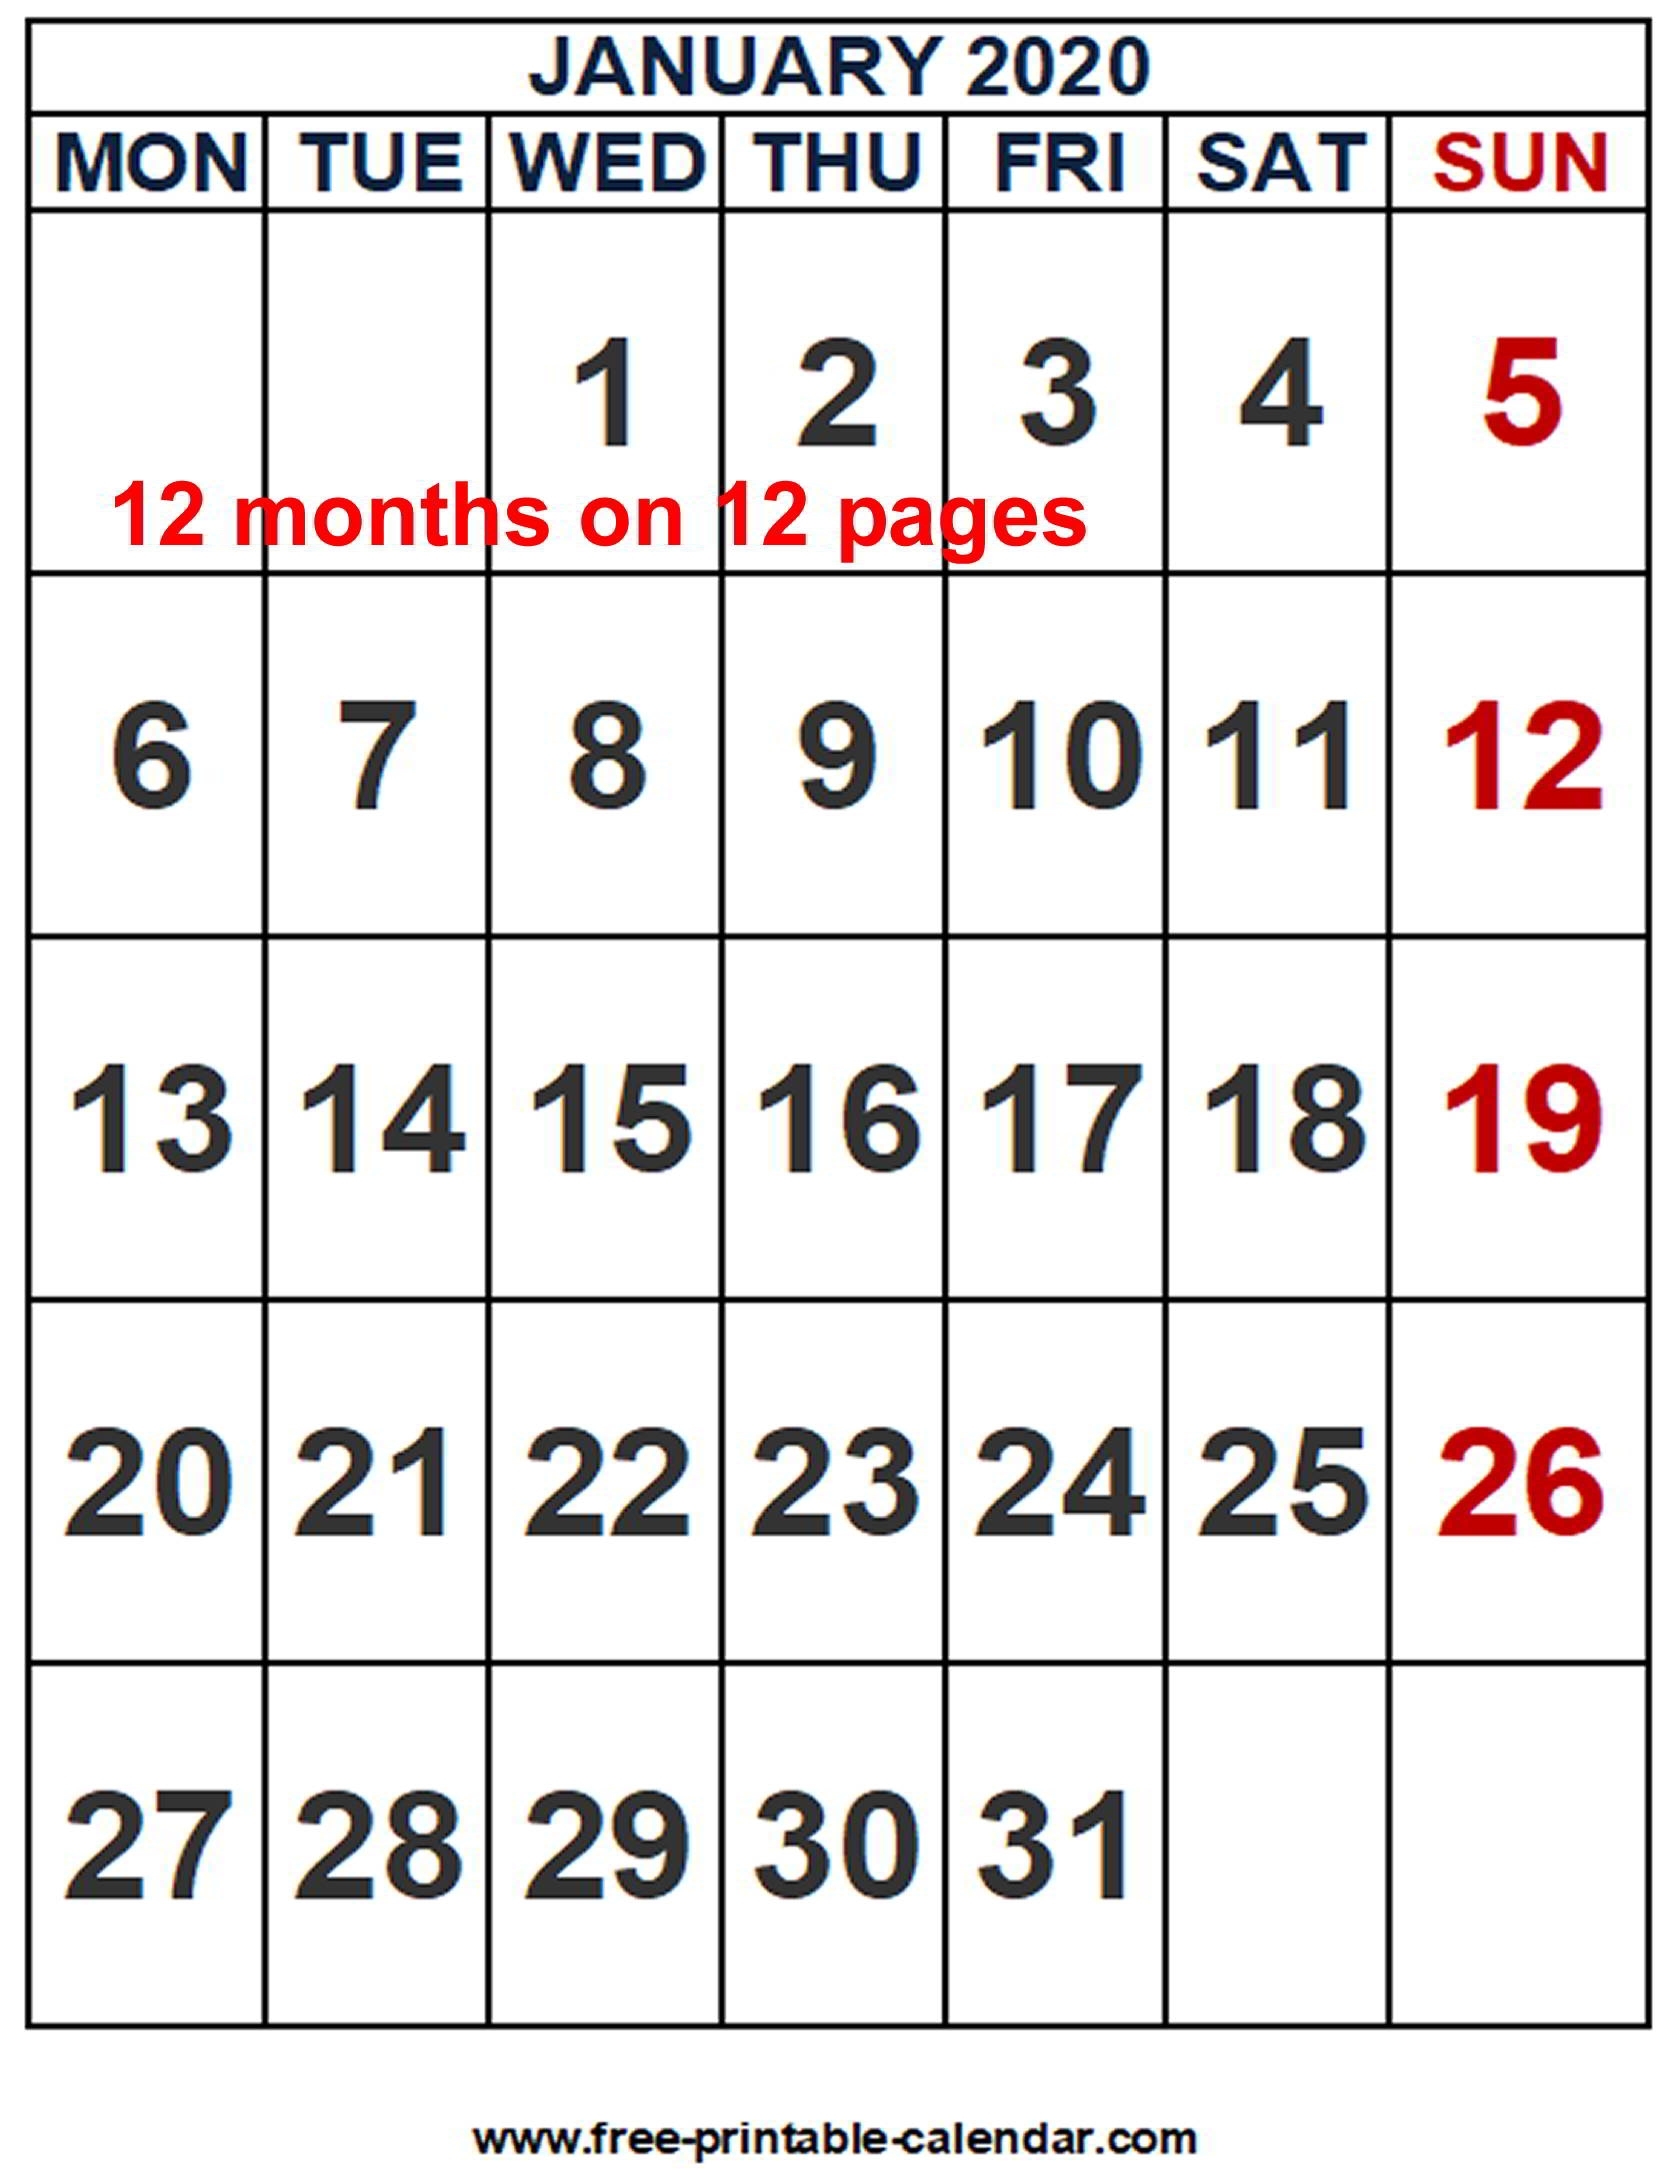 2020 Calendar Word Template - Free-Printable-Calendar pertaining to Downloadable Calendar 2020 For Word